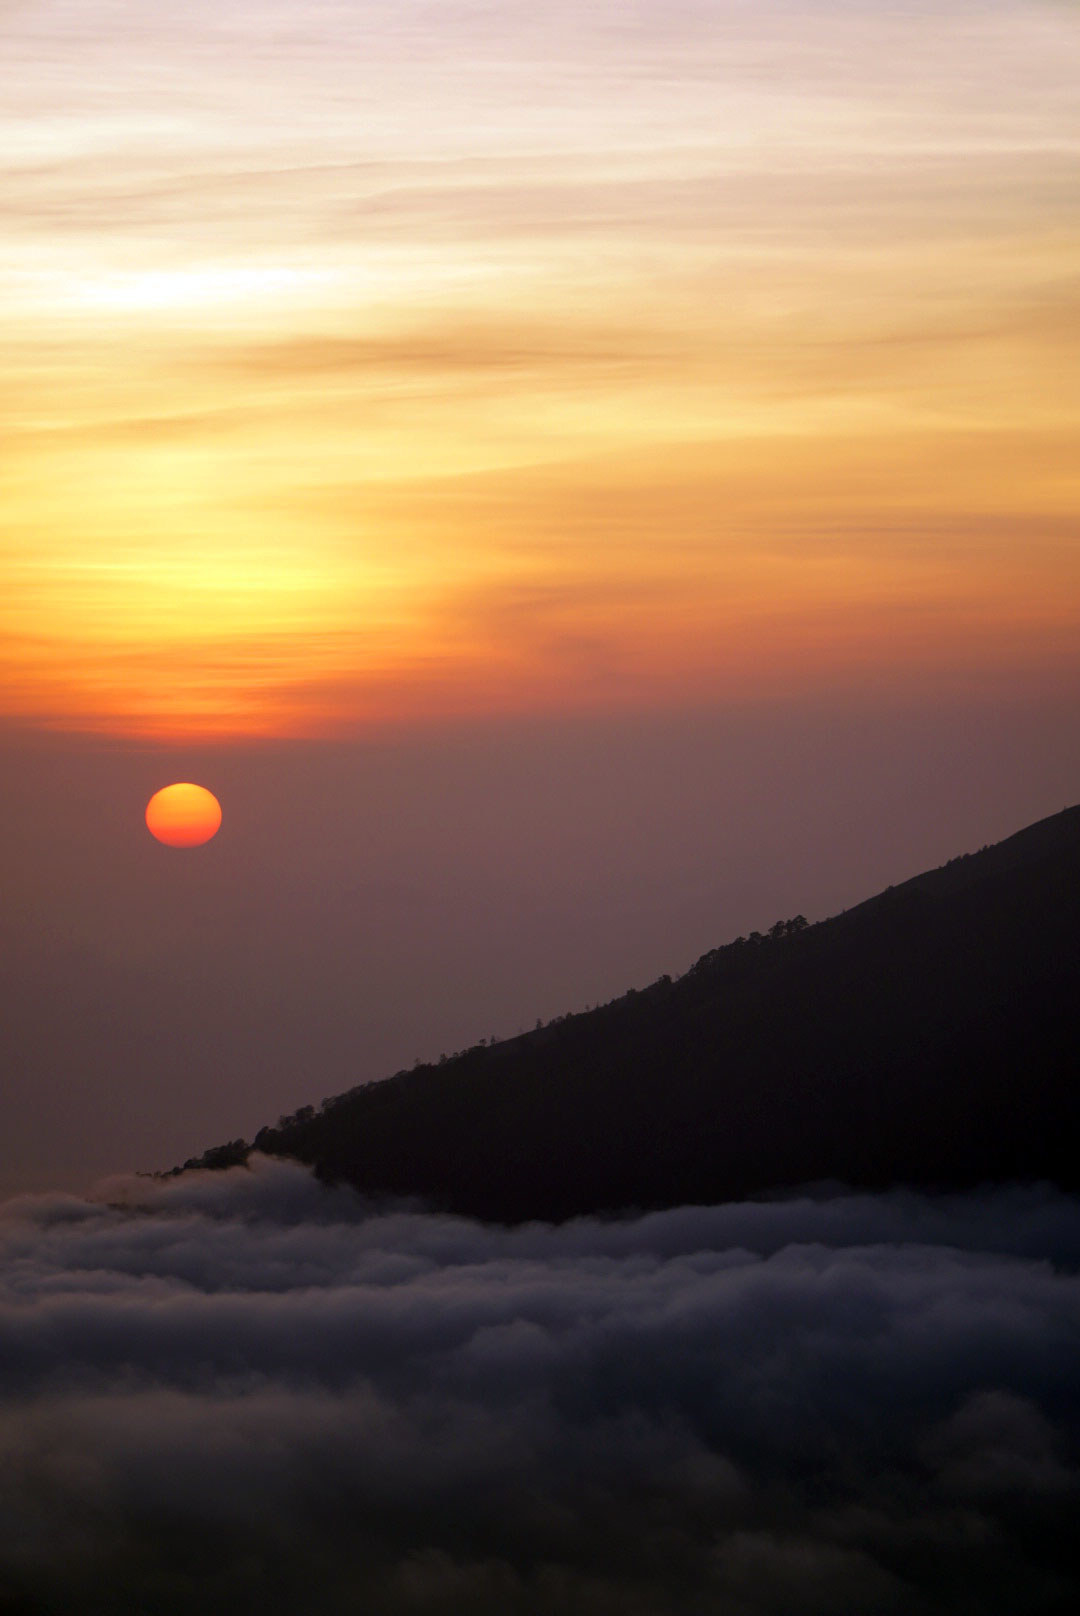 A sunrise over a volcano